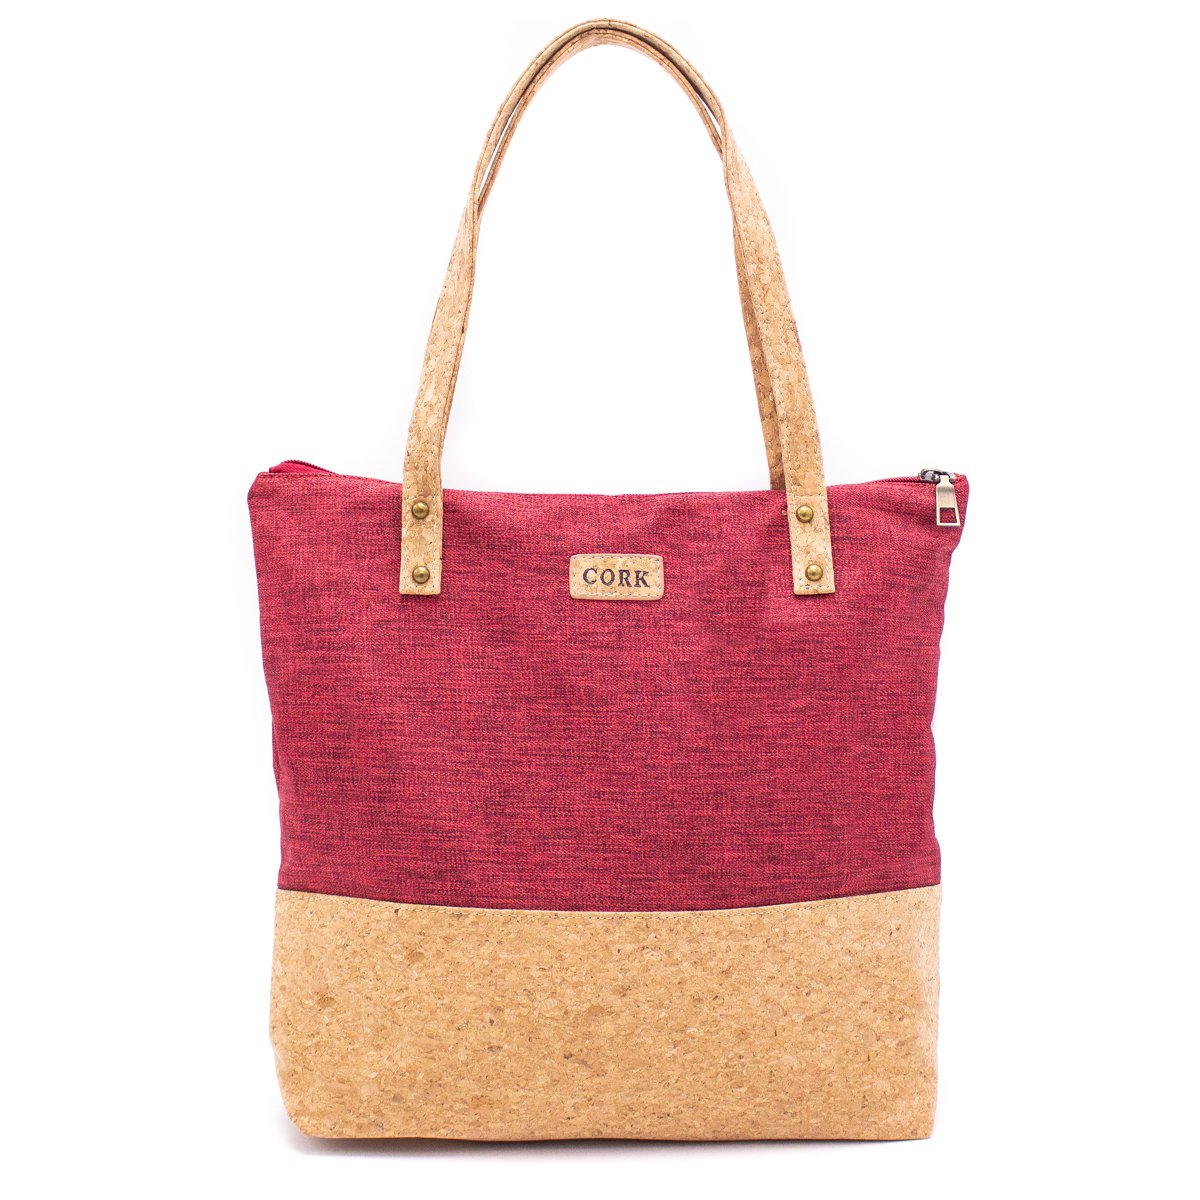 Shop Cork Handbags for Women, The Vegan Collection of Purses